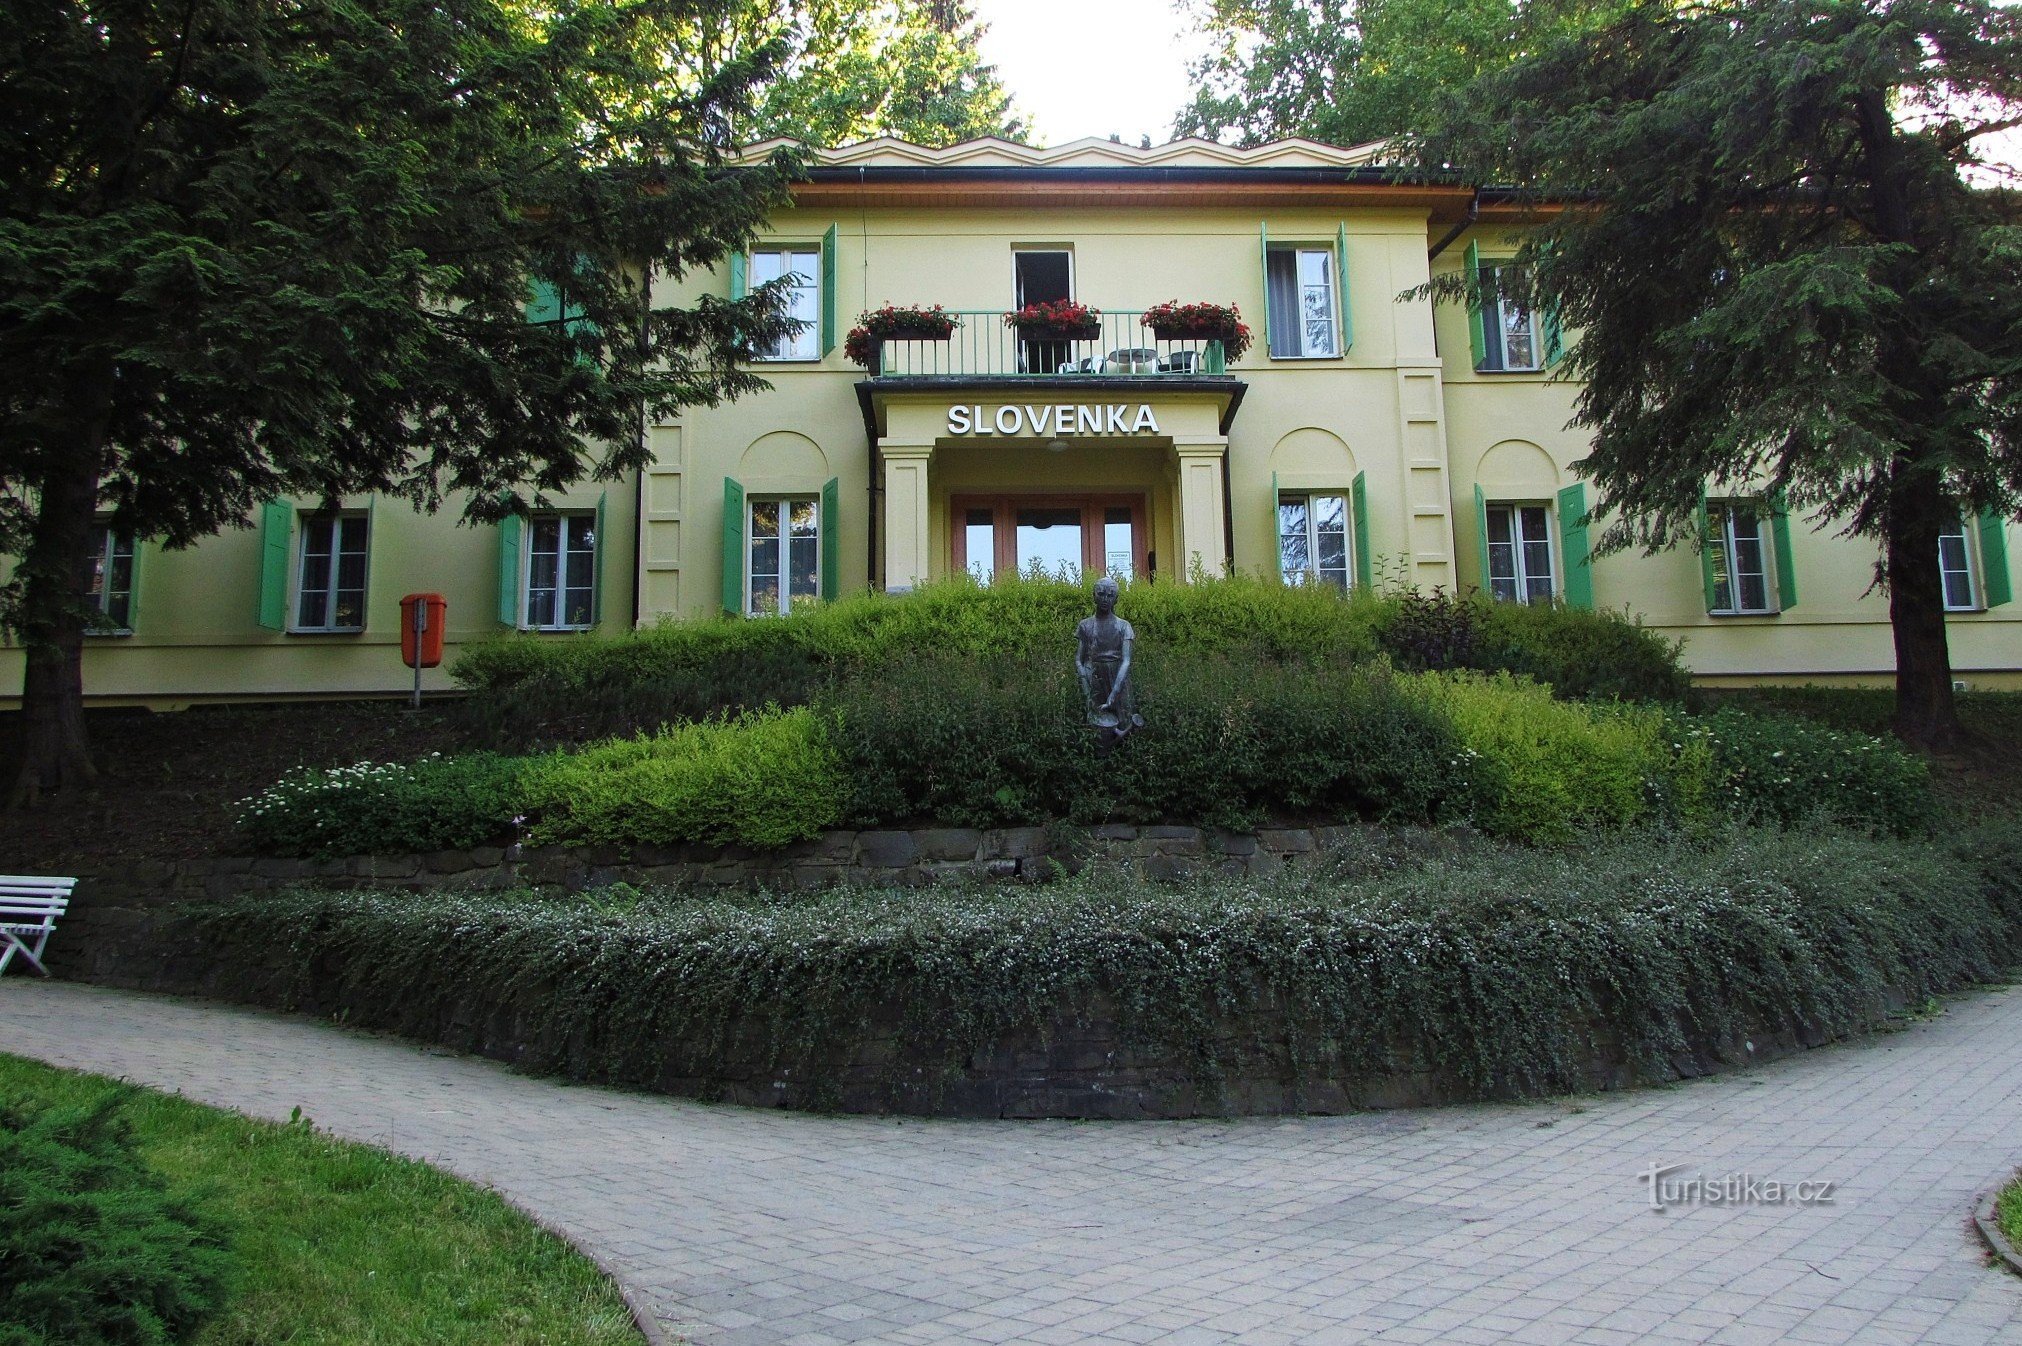 Alojamento na casa de spa Slovenka em Teplice nad Bečvou